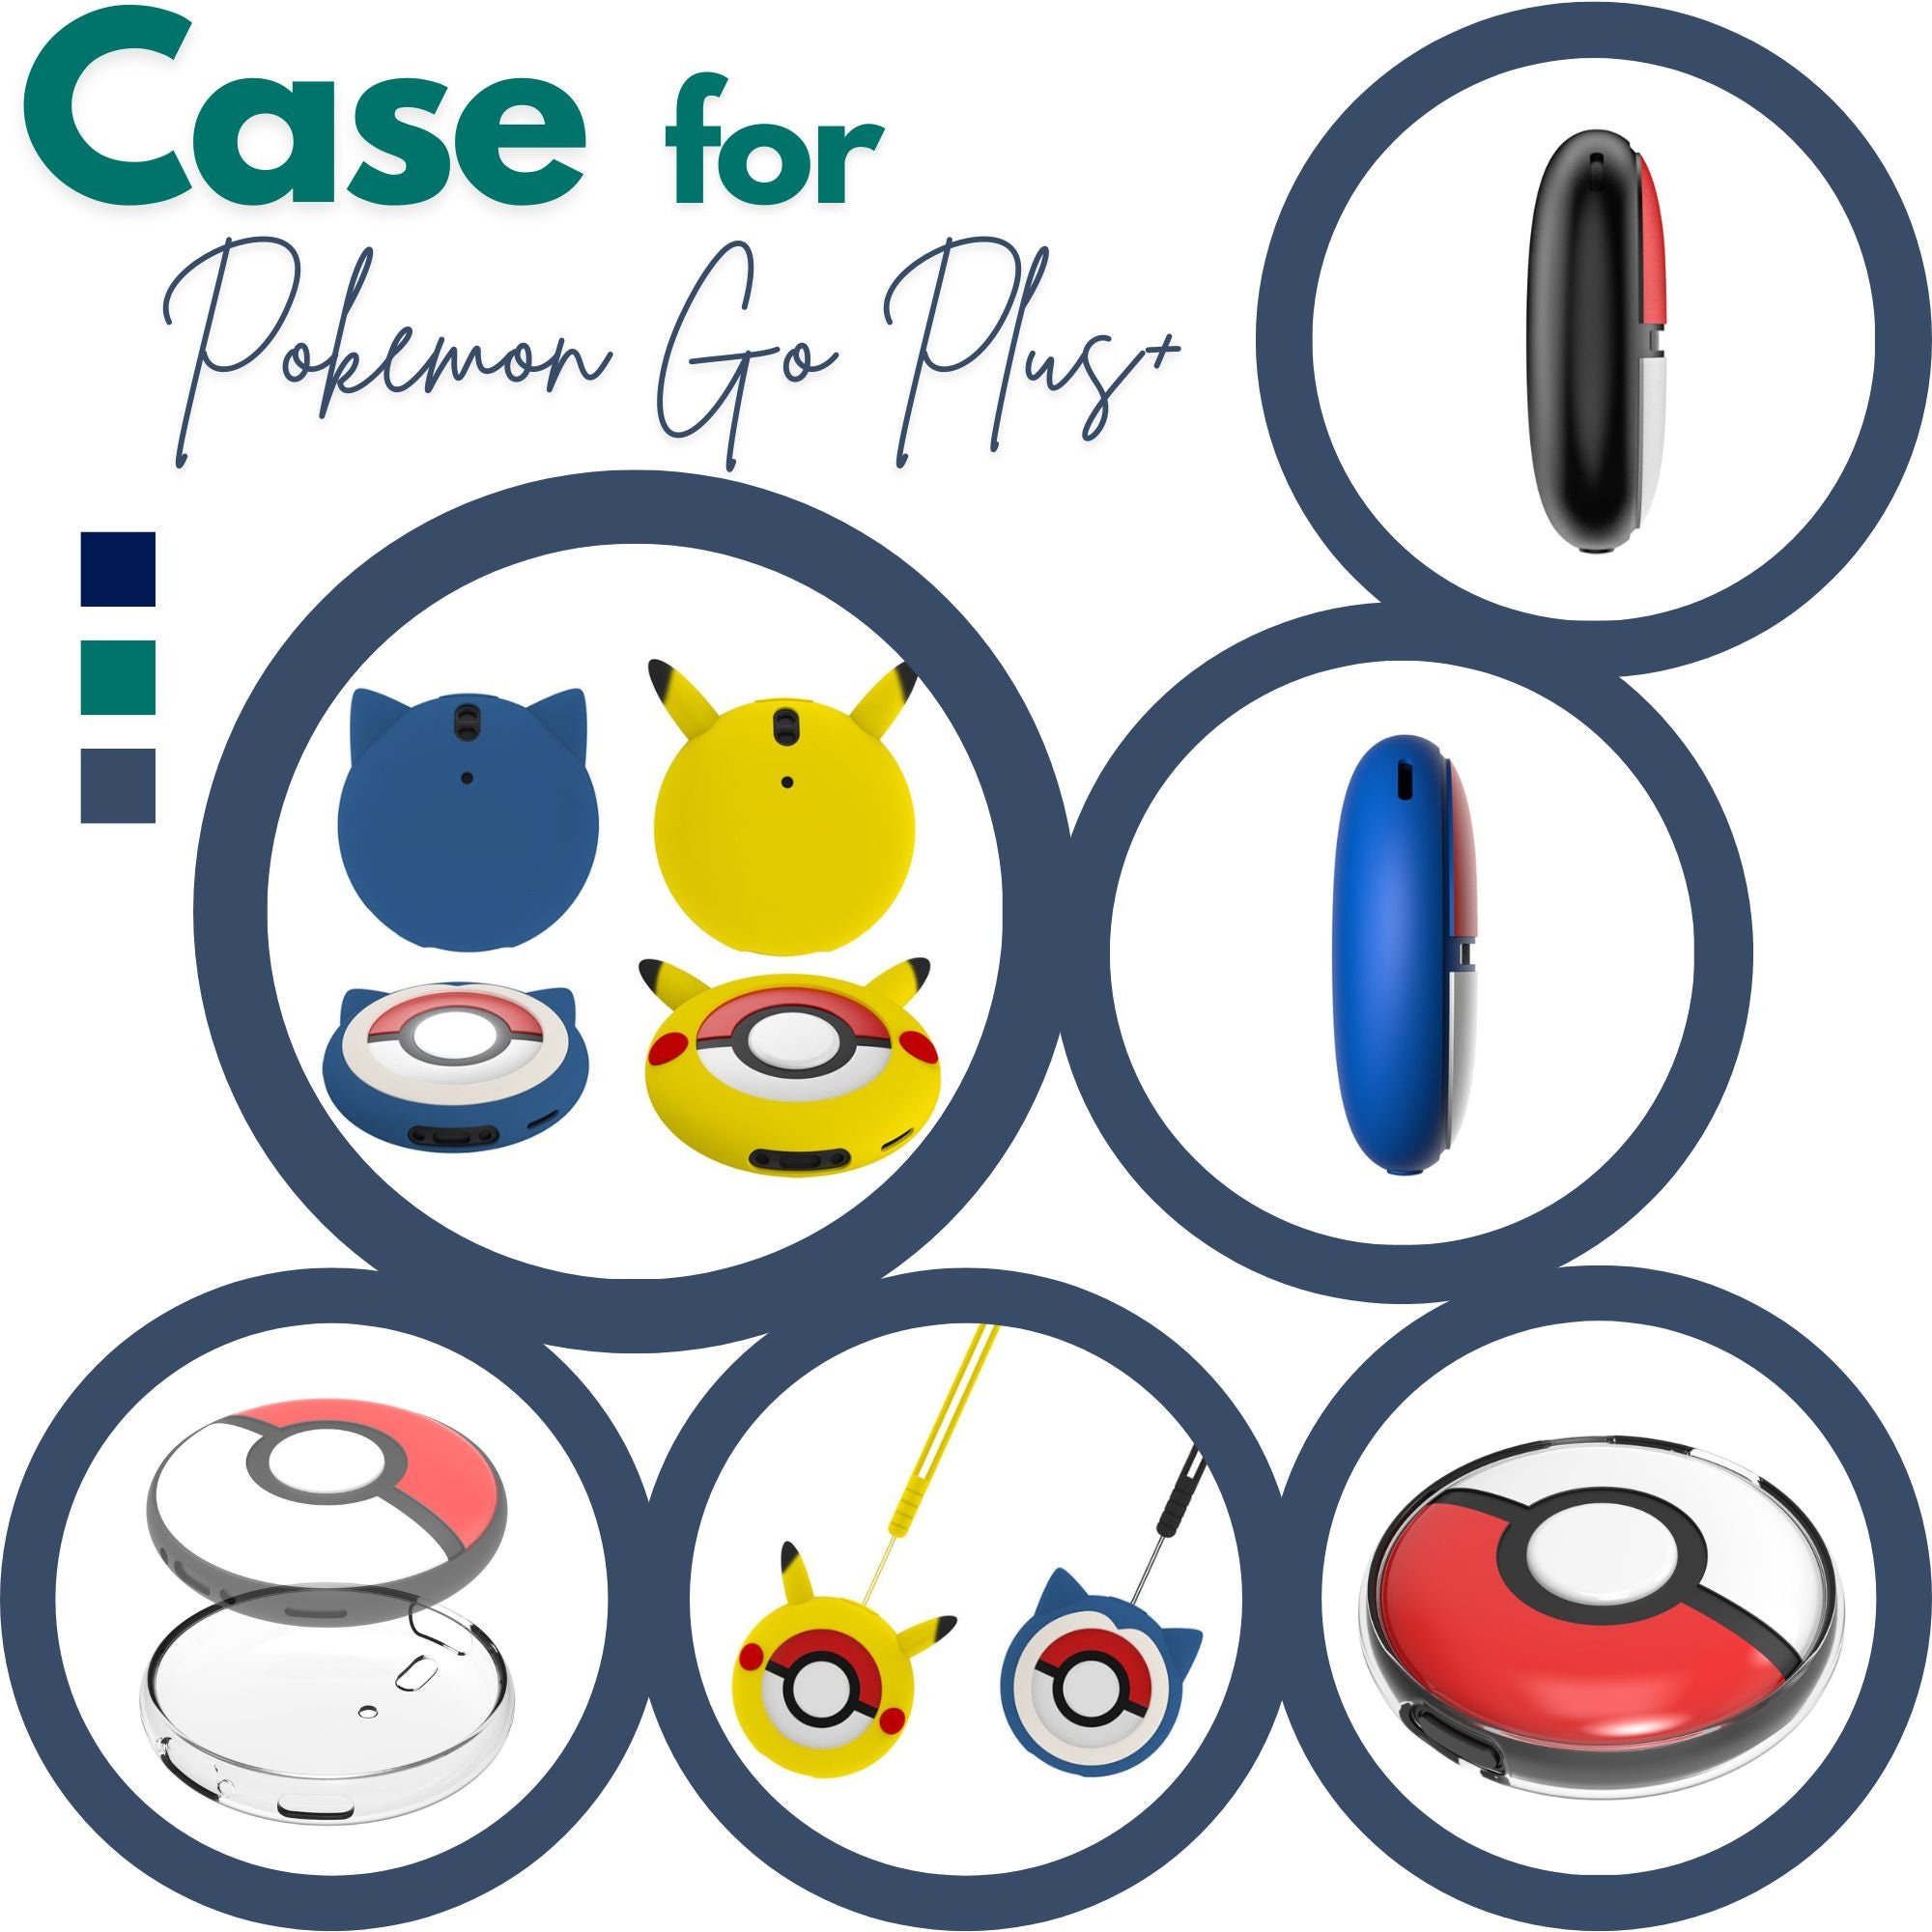 Silicon Pouch Plus+ for Pokemon GO Plus + (White x Red) for Android, iOS